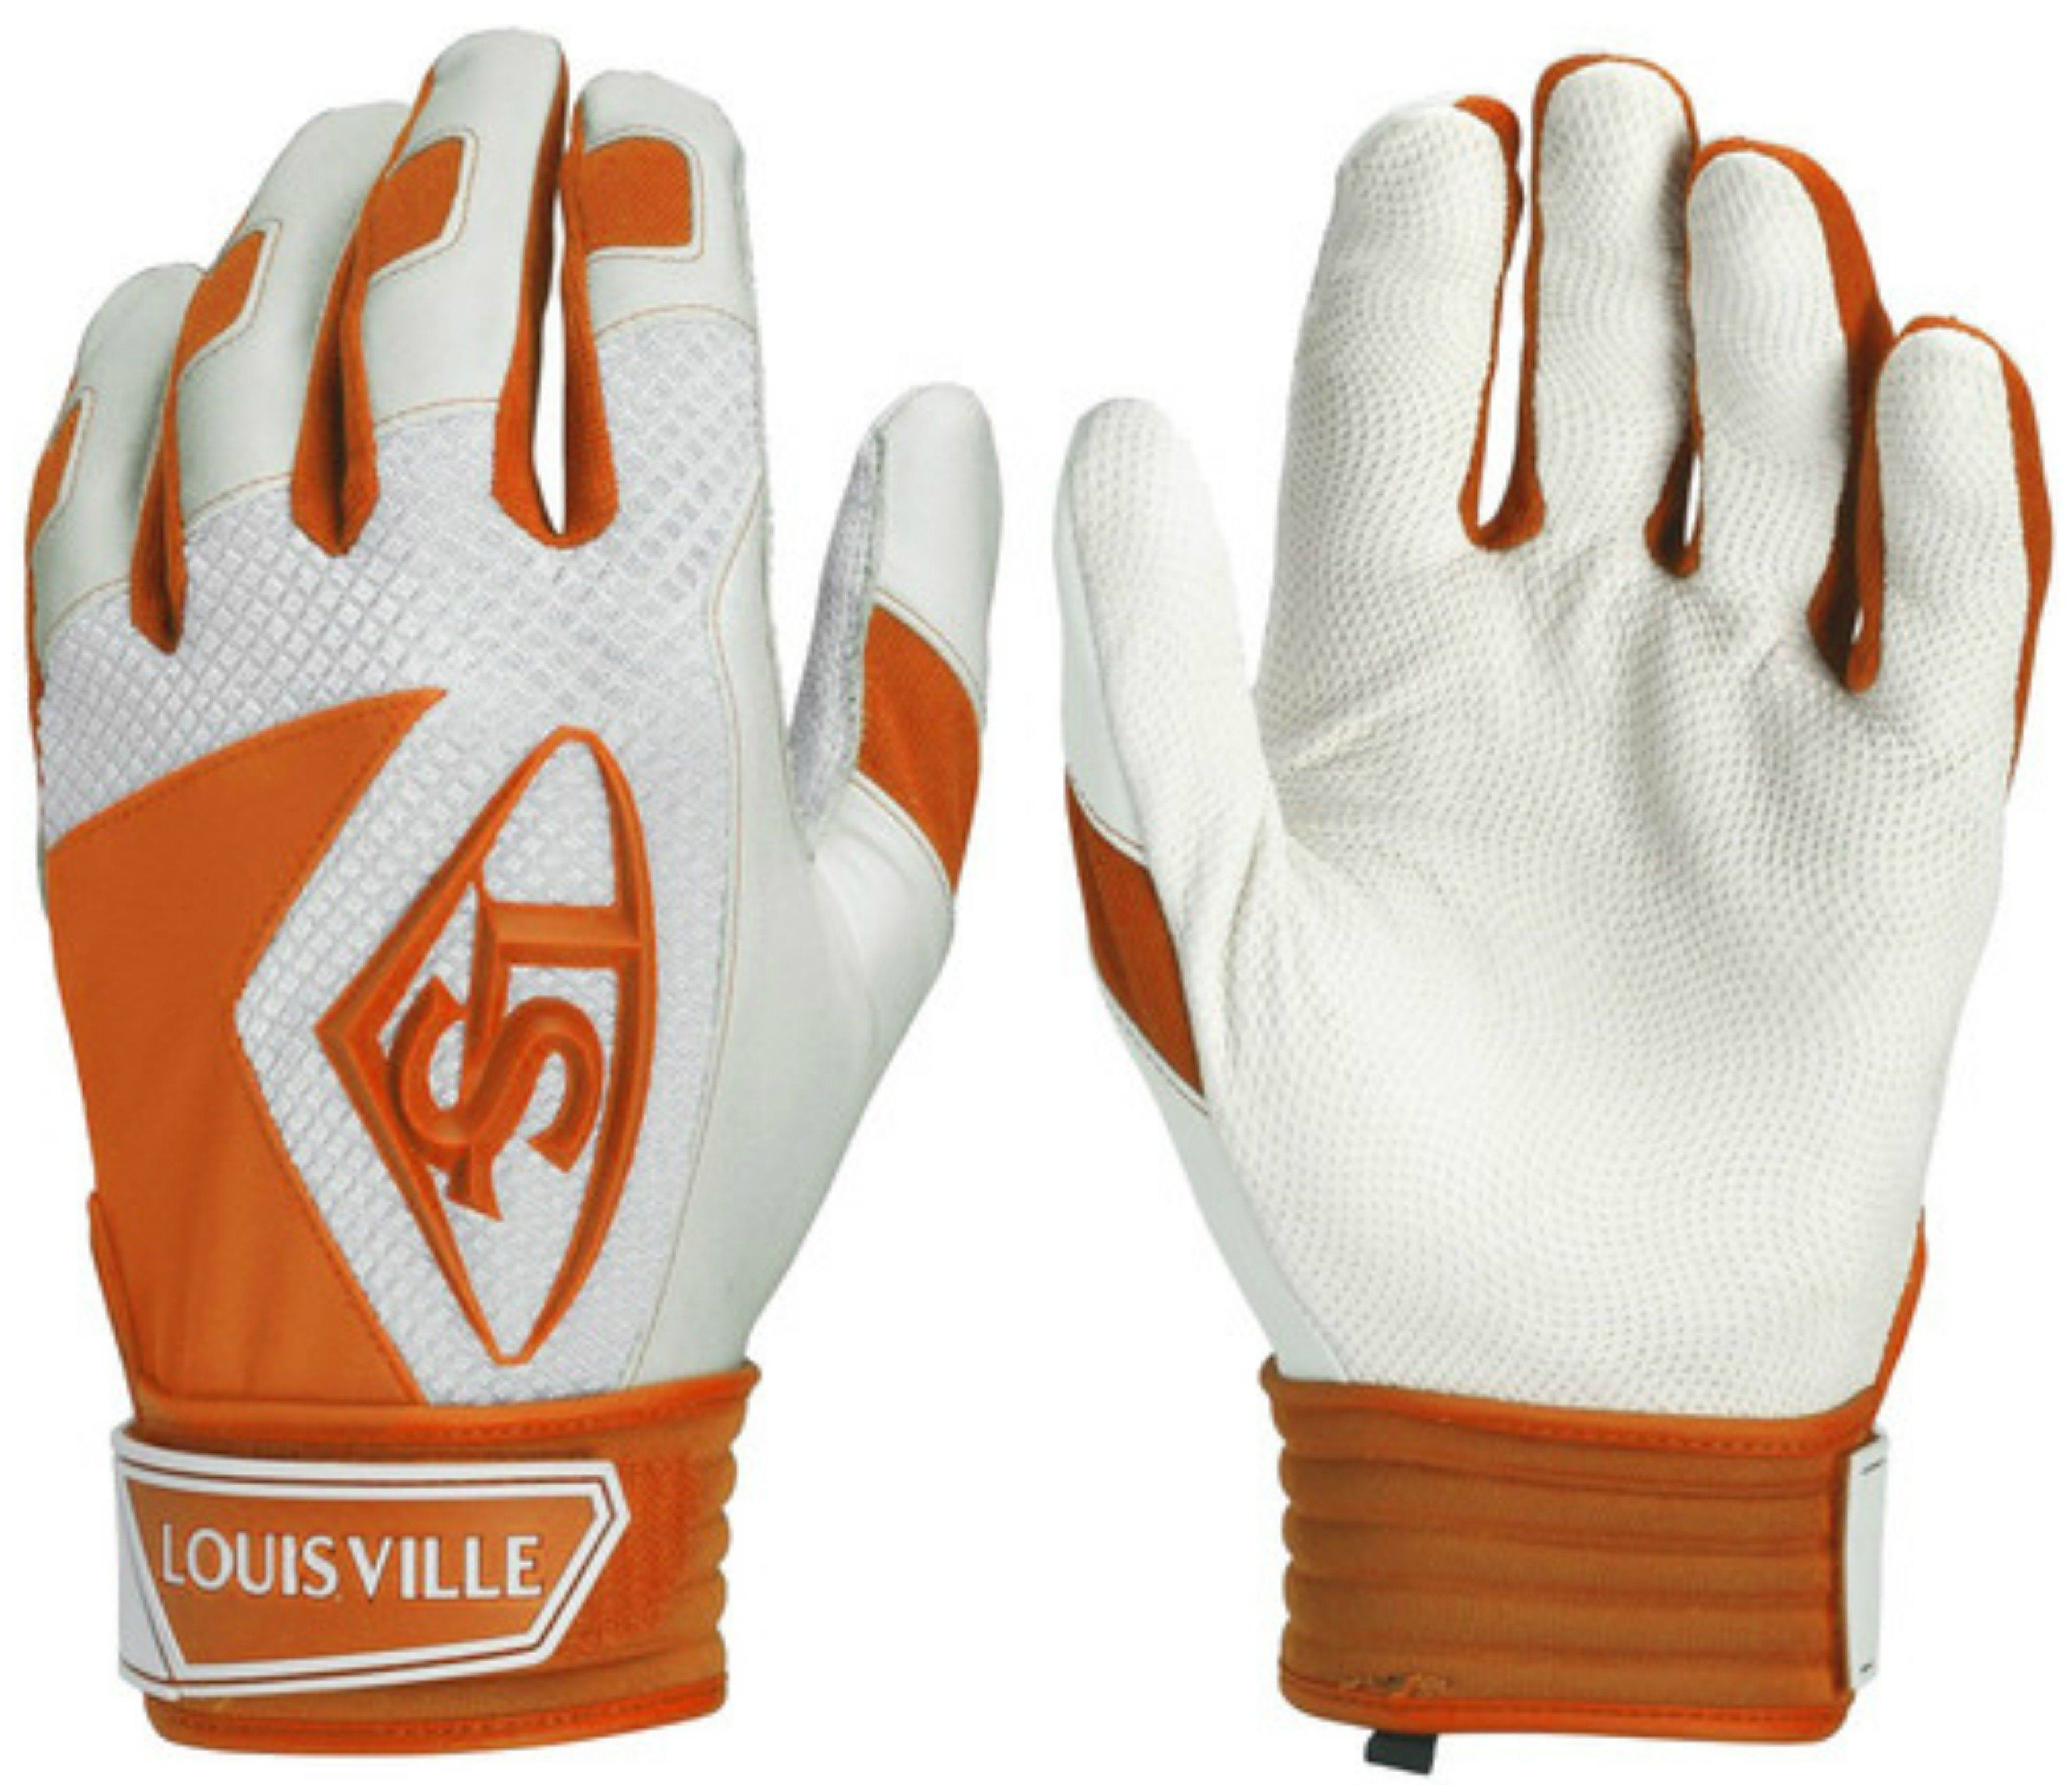 Louisville Slugger Series 7 Adult Large Batting Gloves Orange and White NEW 